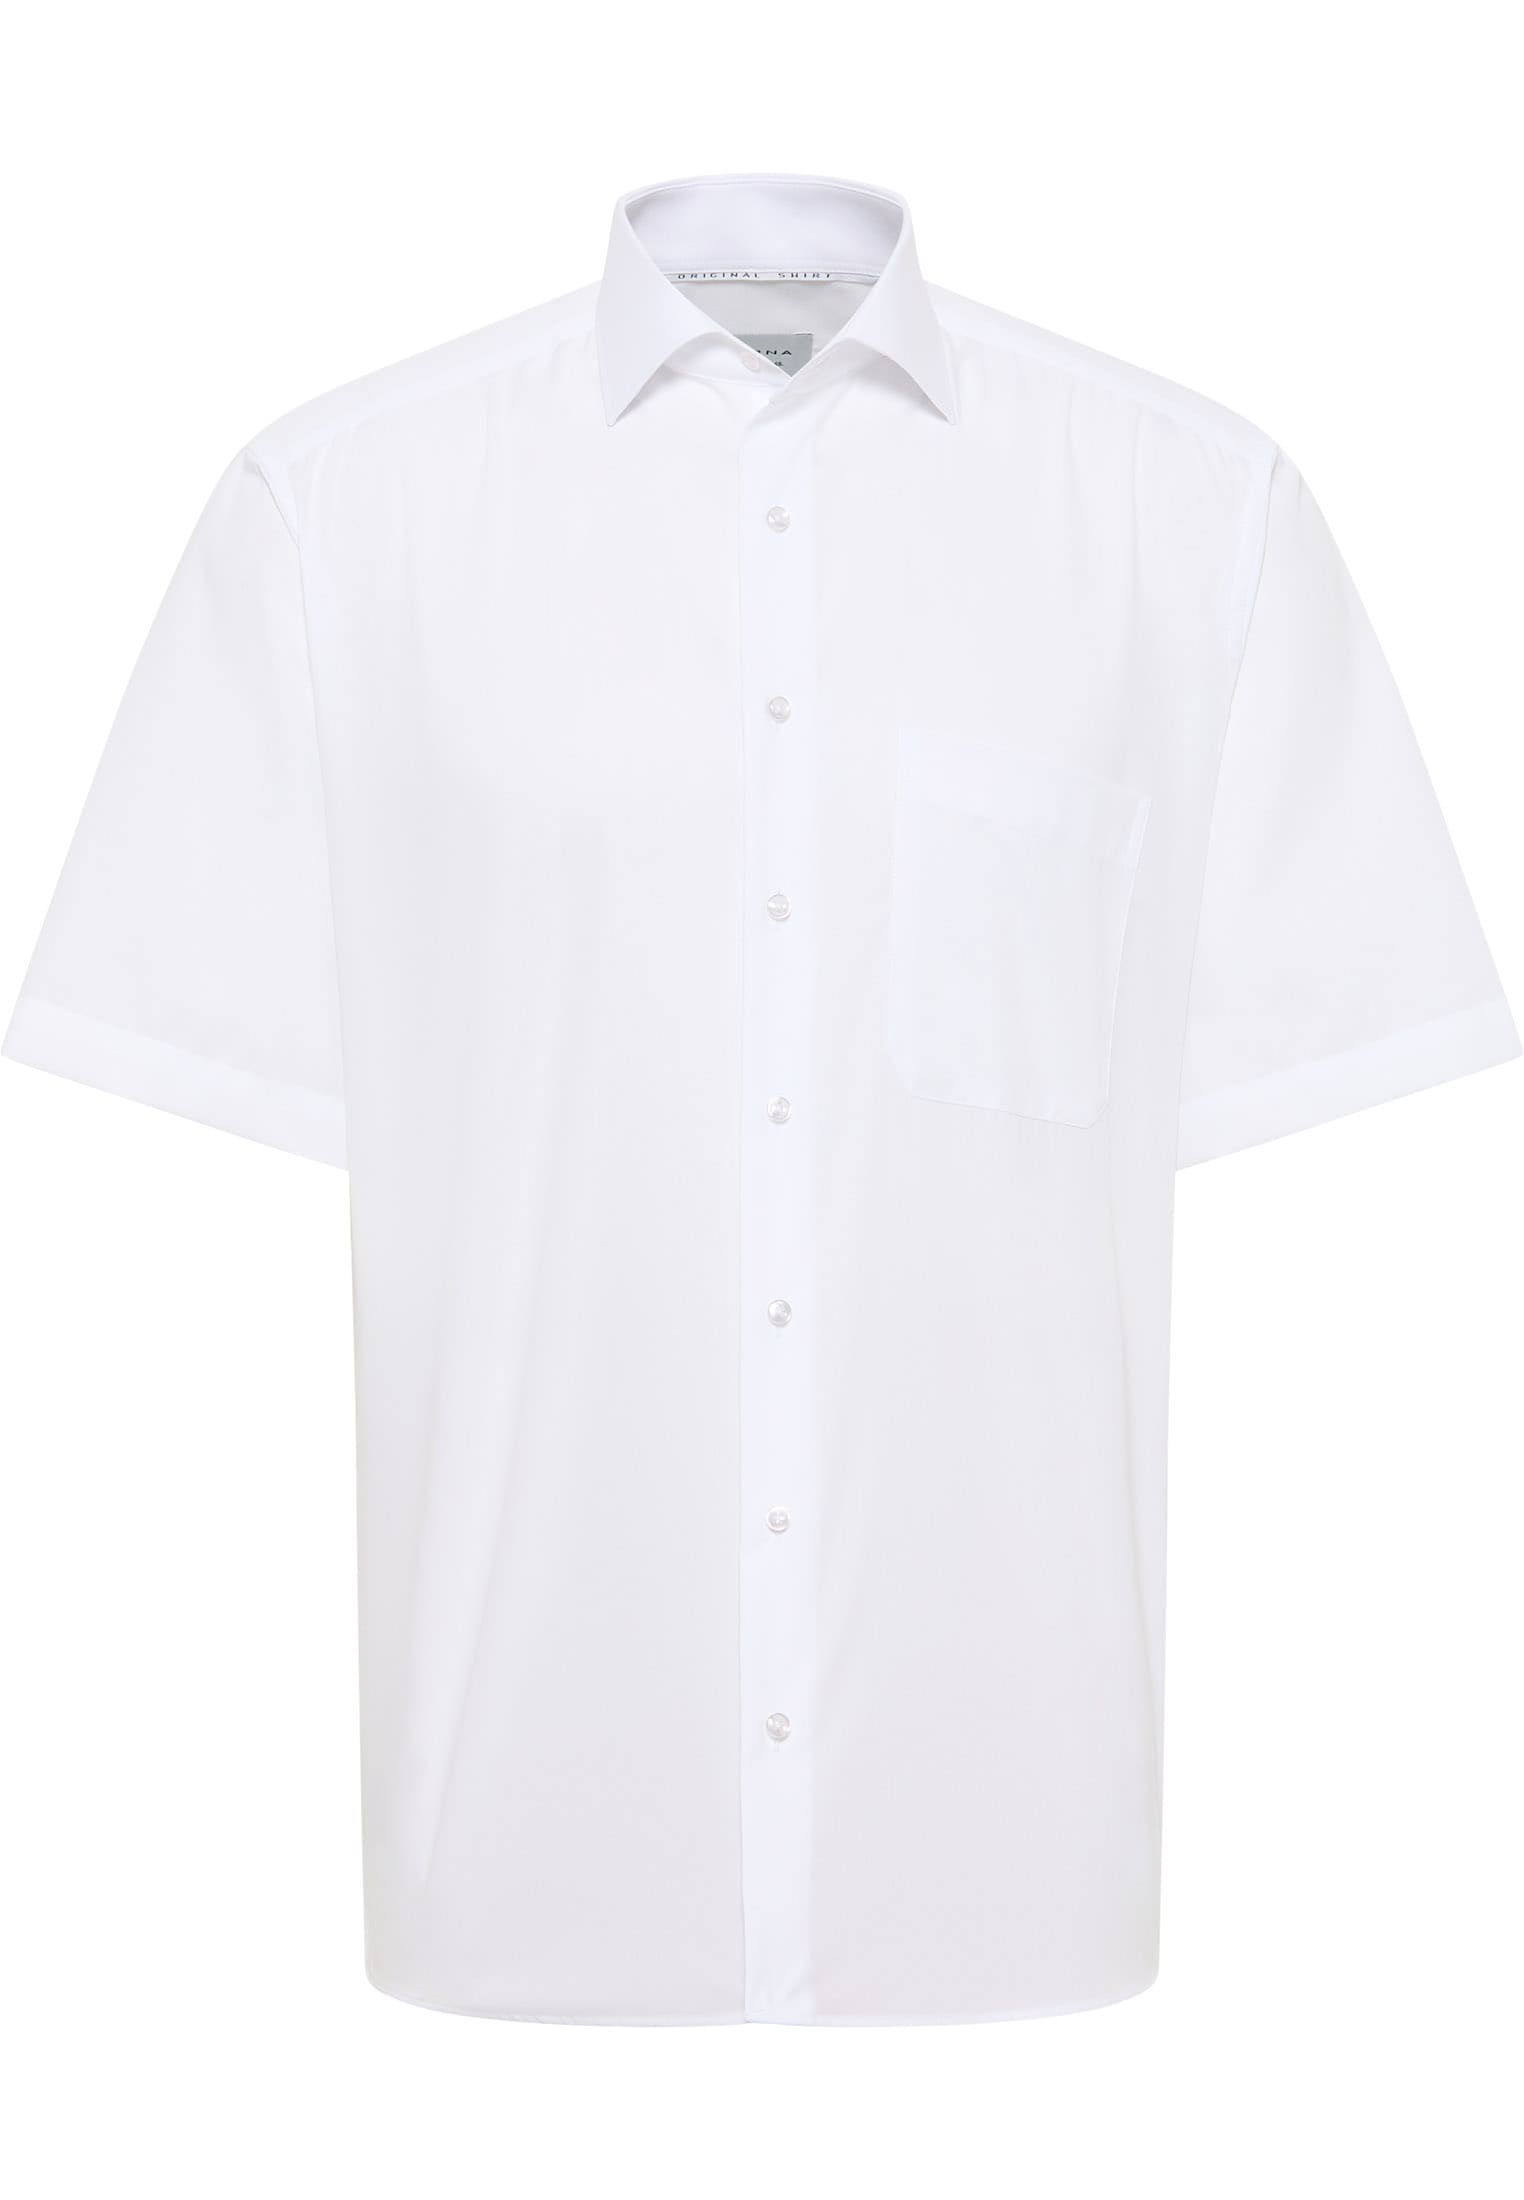 COMFORT FIT Original Shirt in wit vlakte